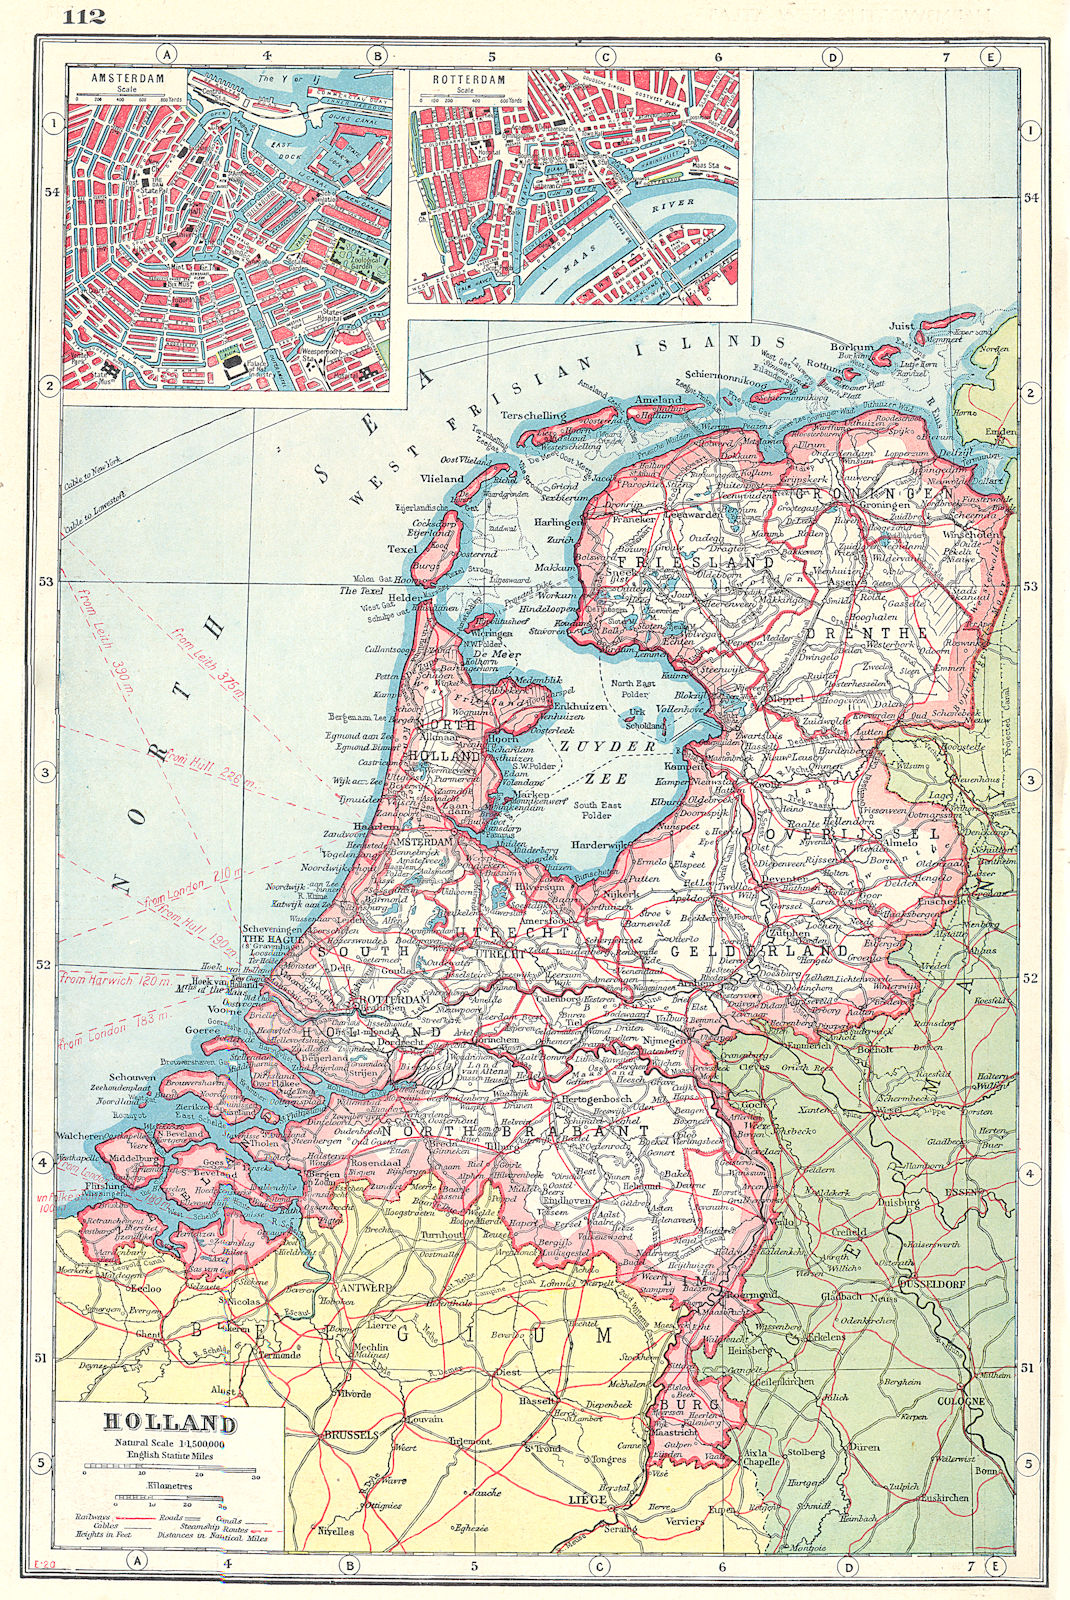 Associate Product NETHERLANDS. Holland.Railways canals.Inset Amsterdam & Rotterdam plans 1920 map